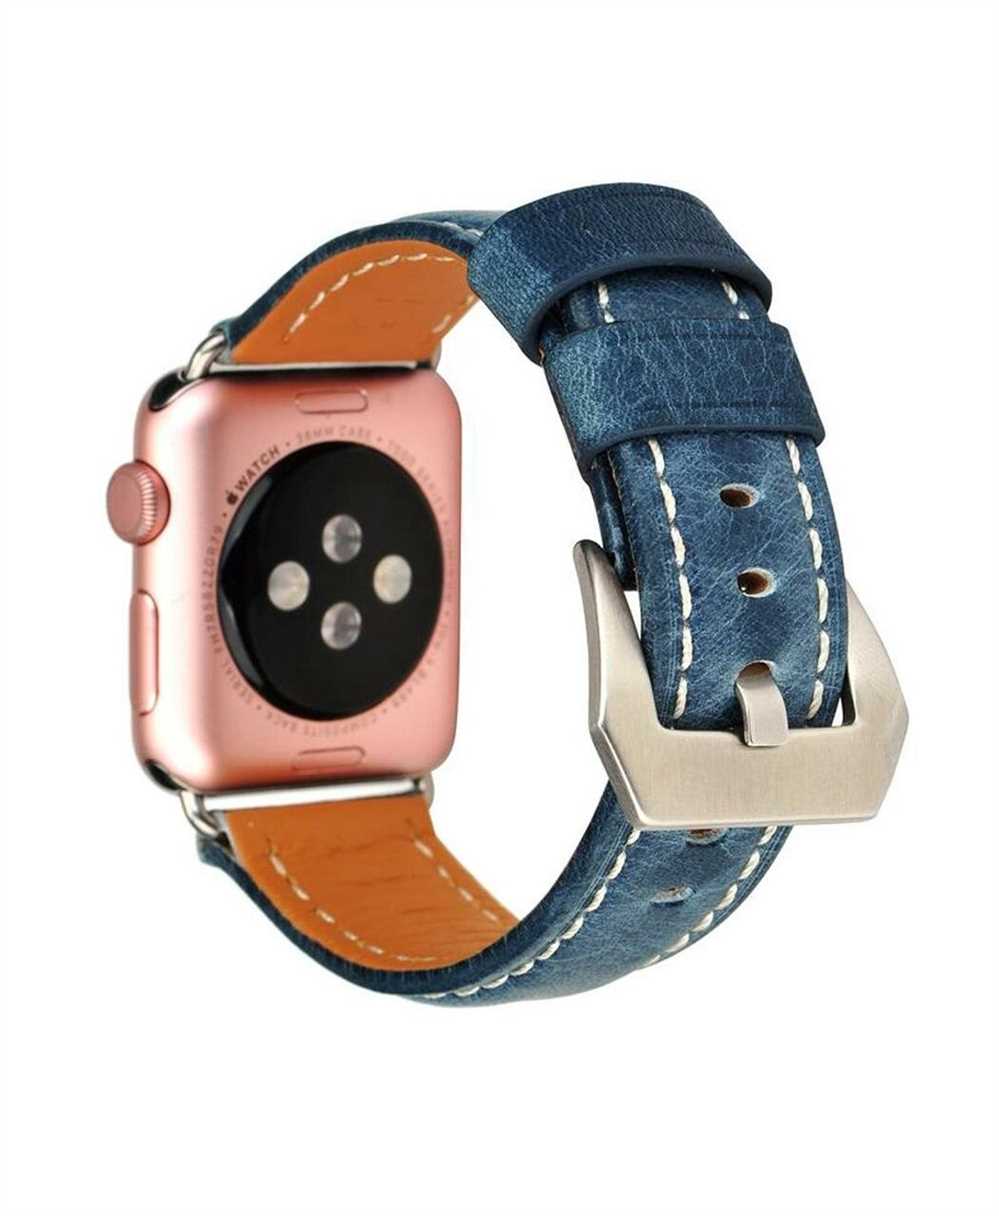 Apple watch strap navy blue